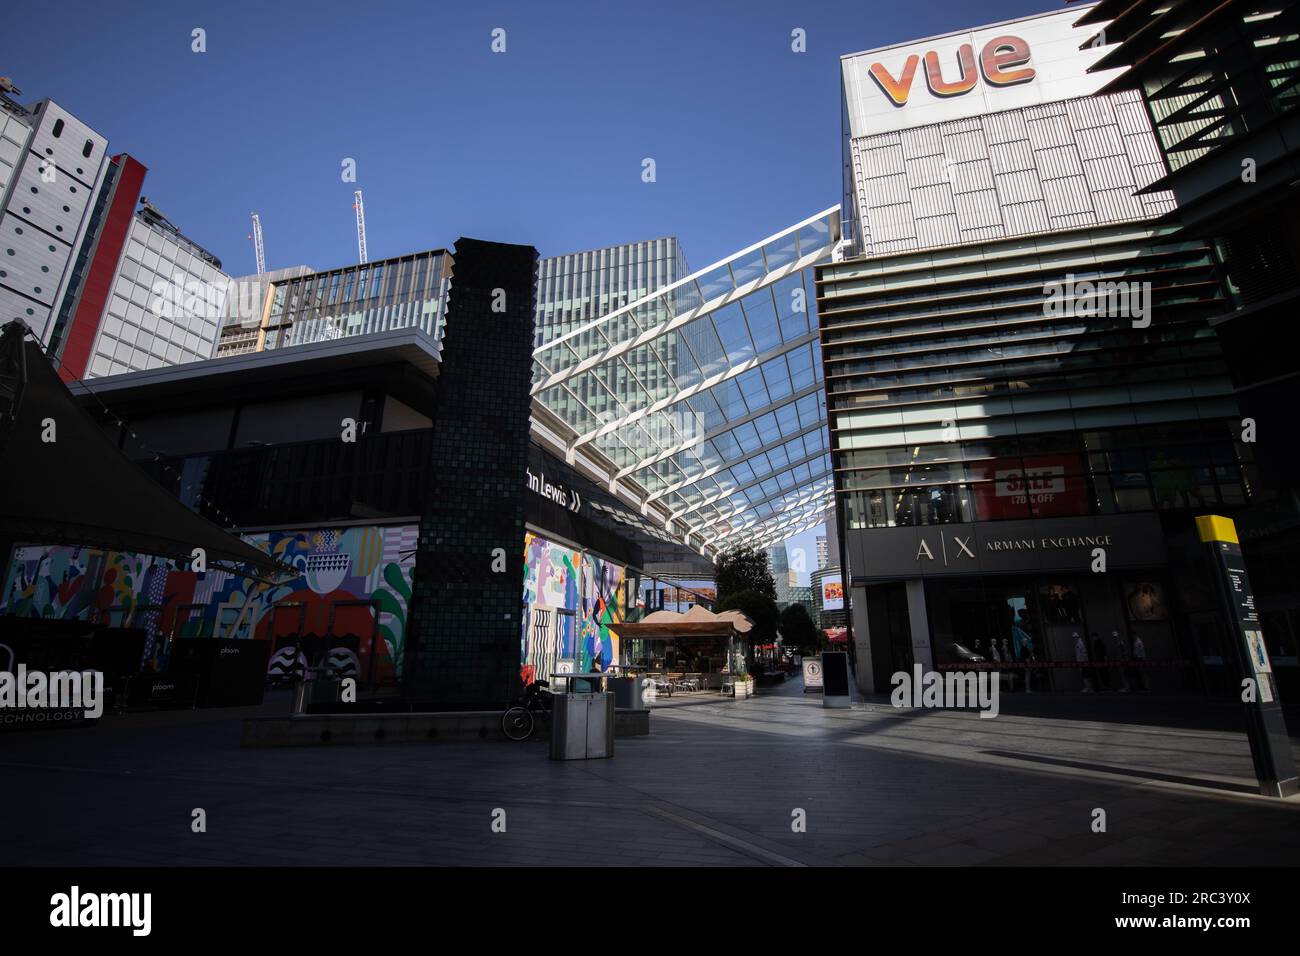 VUE cinema complex, Westfield Shopping Centre, Stratford, East London, England, United Kingdom Stock Photo